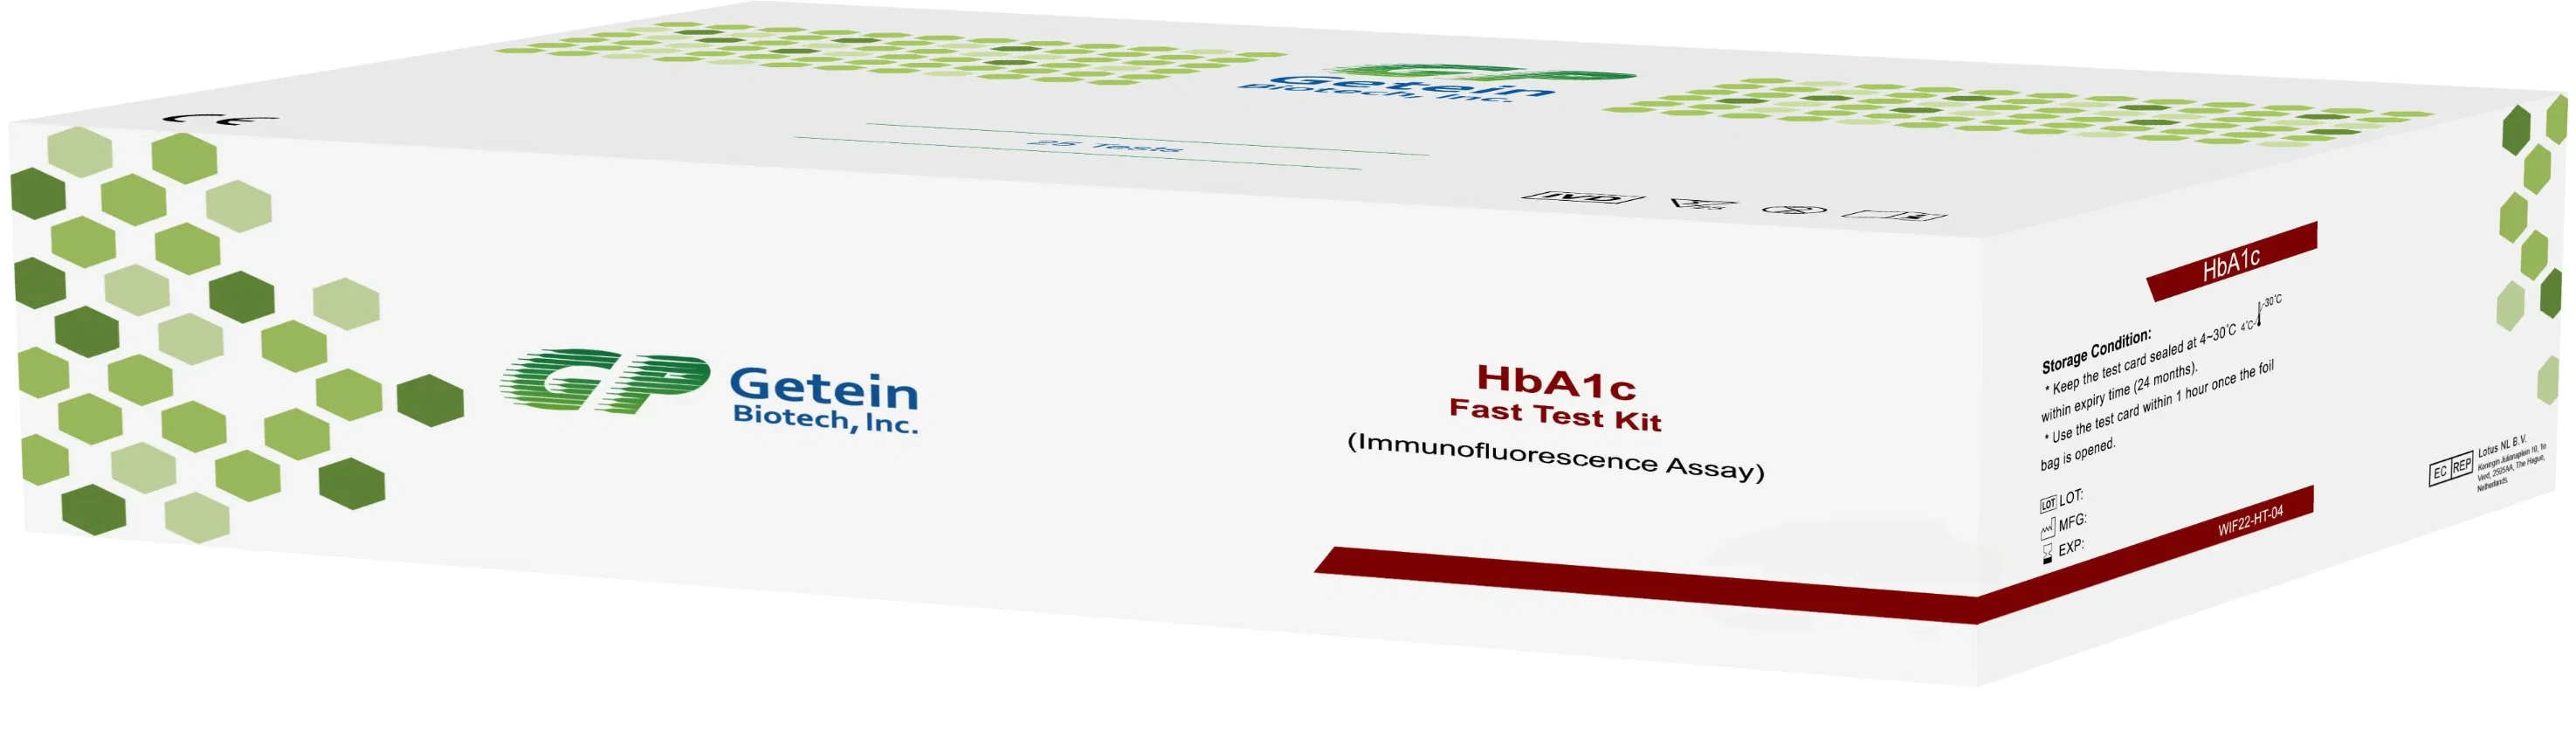 Getein Hba1c Fast Test Immunofluorescence Kit Wholesale/Supplier Hba1c Rapid Test for Cardiovascular Applications